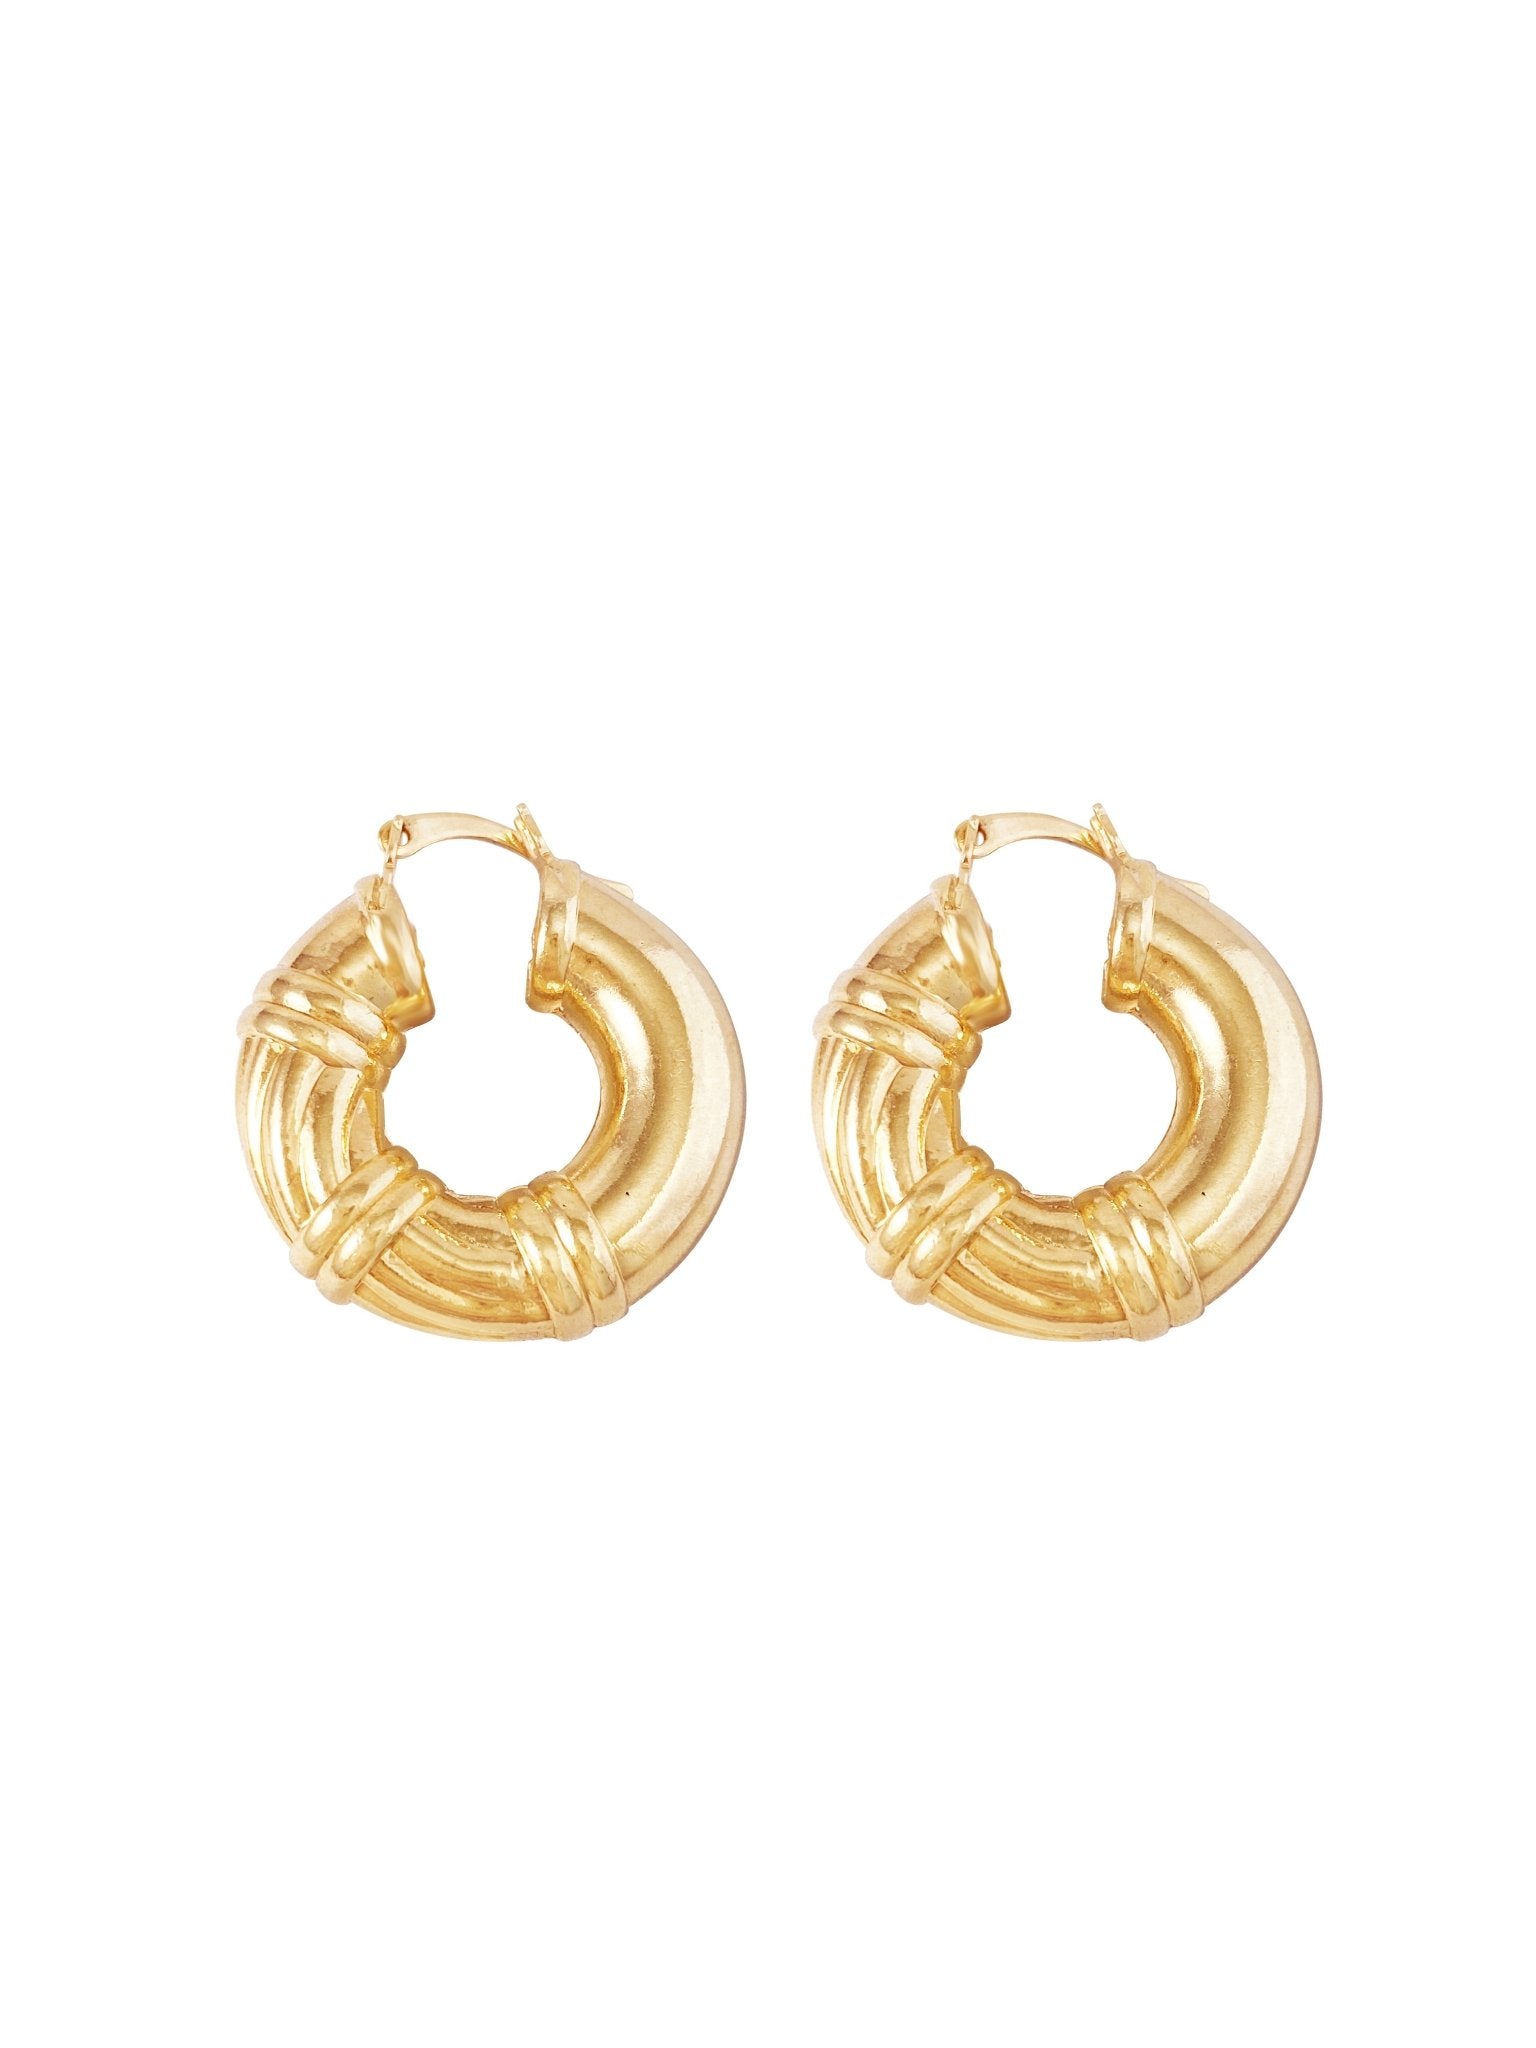 Selena Roped - Gold Hoops - NOA Jewels - Earrings